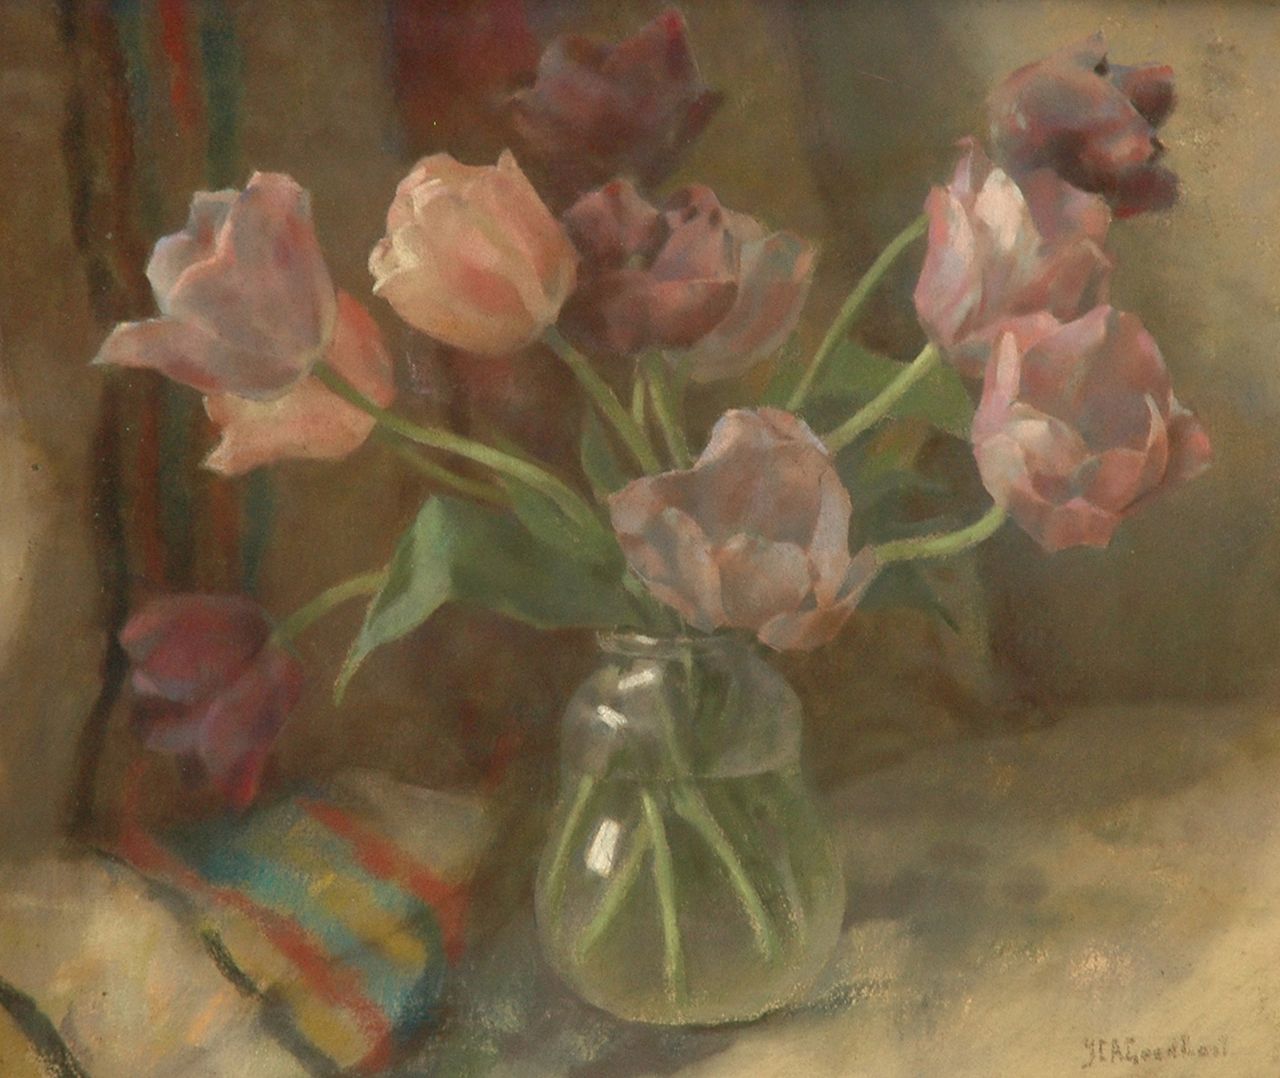 Goedhart J.C.A.  | 'Jan' Catharinus Adriaan Goedhart, Tulips, Pastell auf Leinwand 50,0 x 60,0 cm, signed l.r.